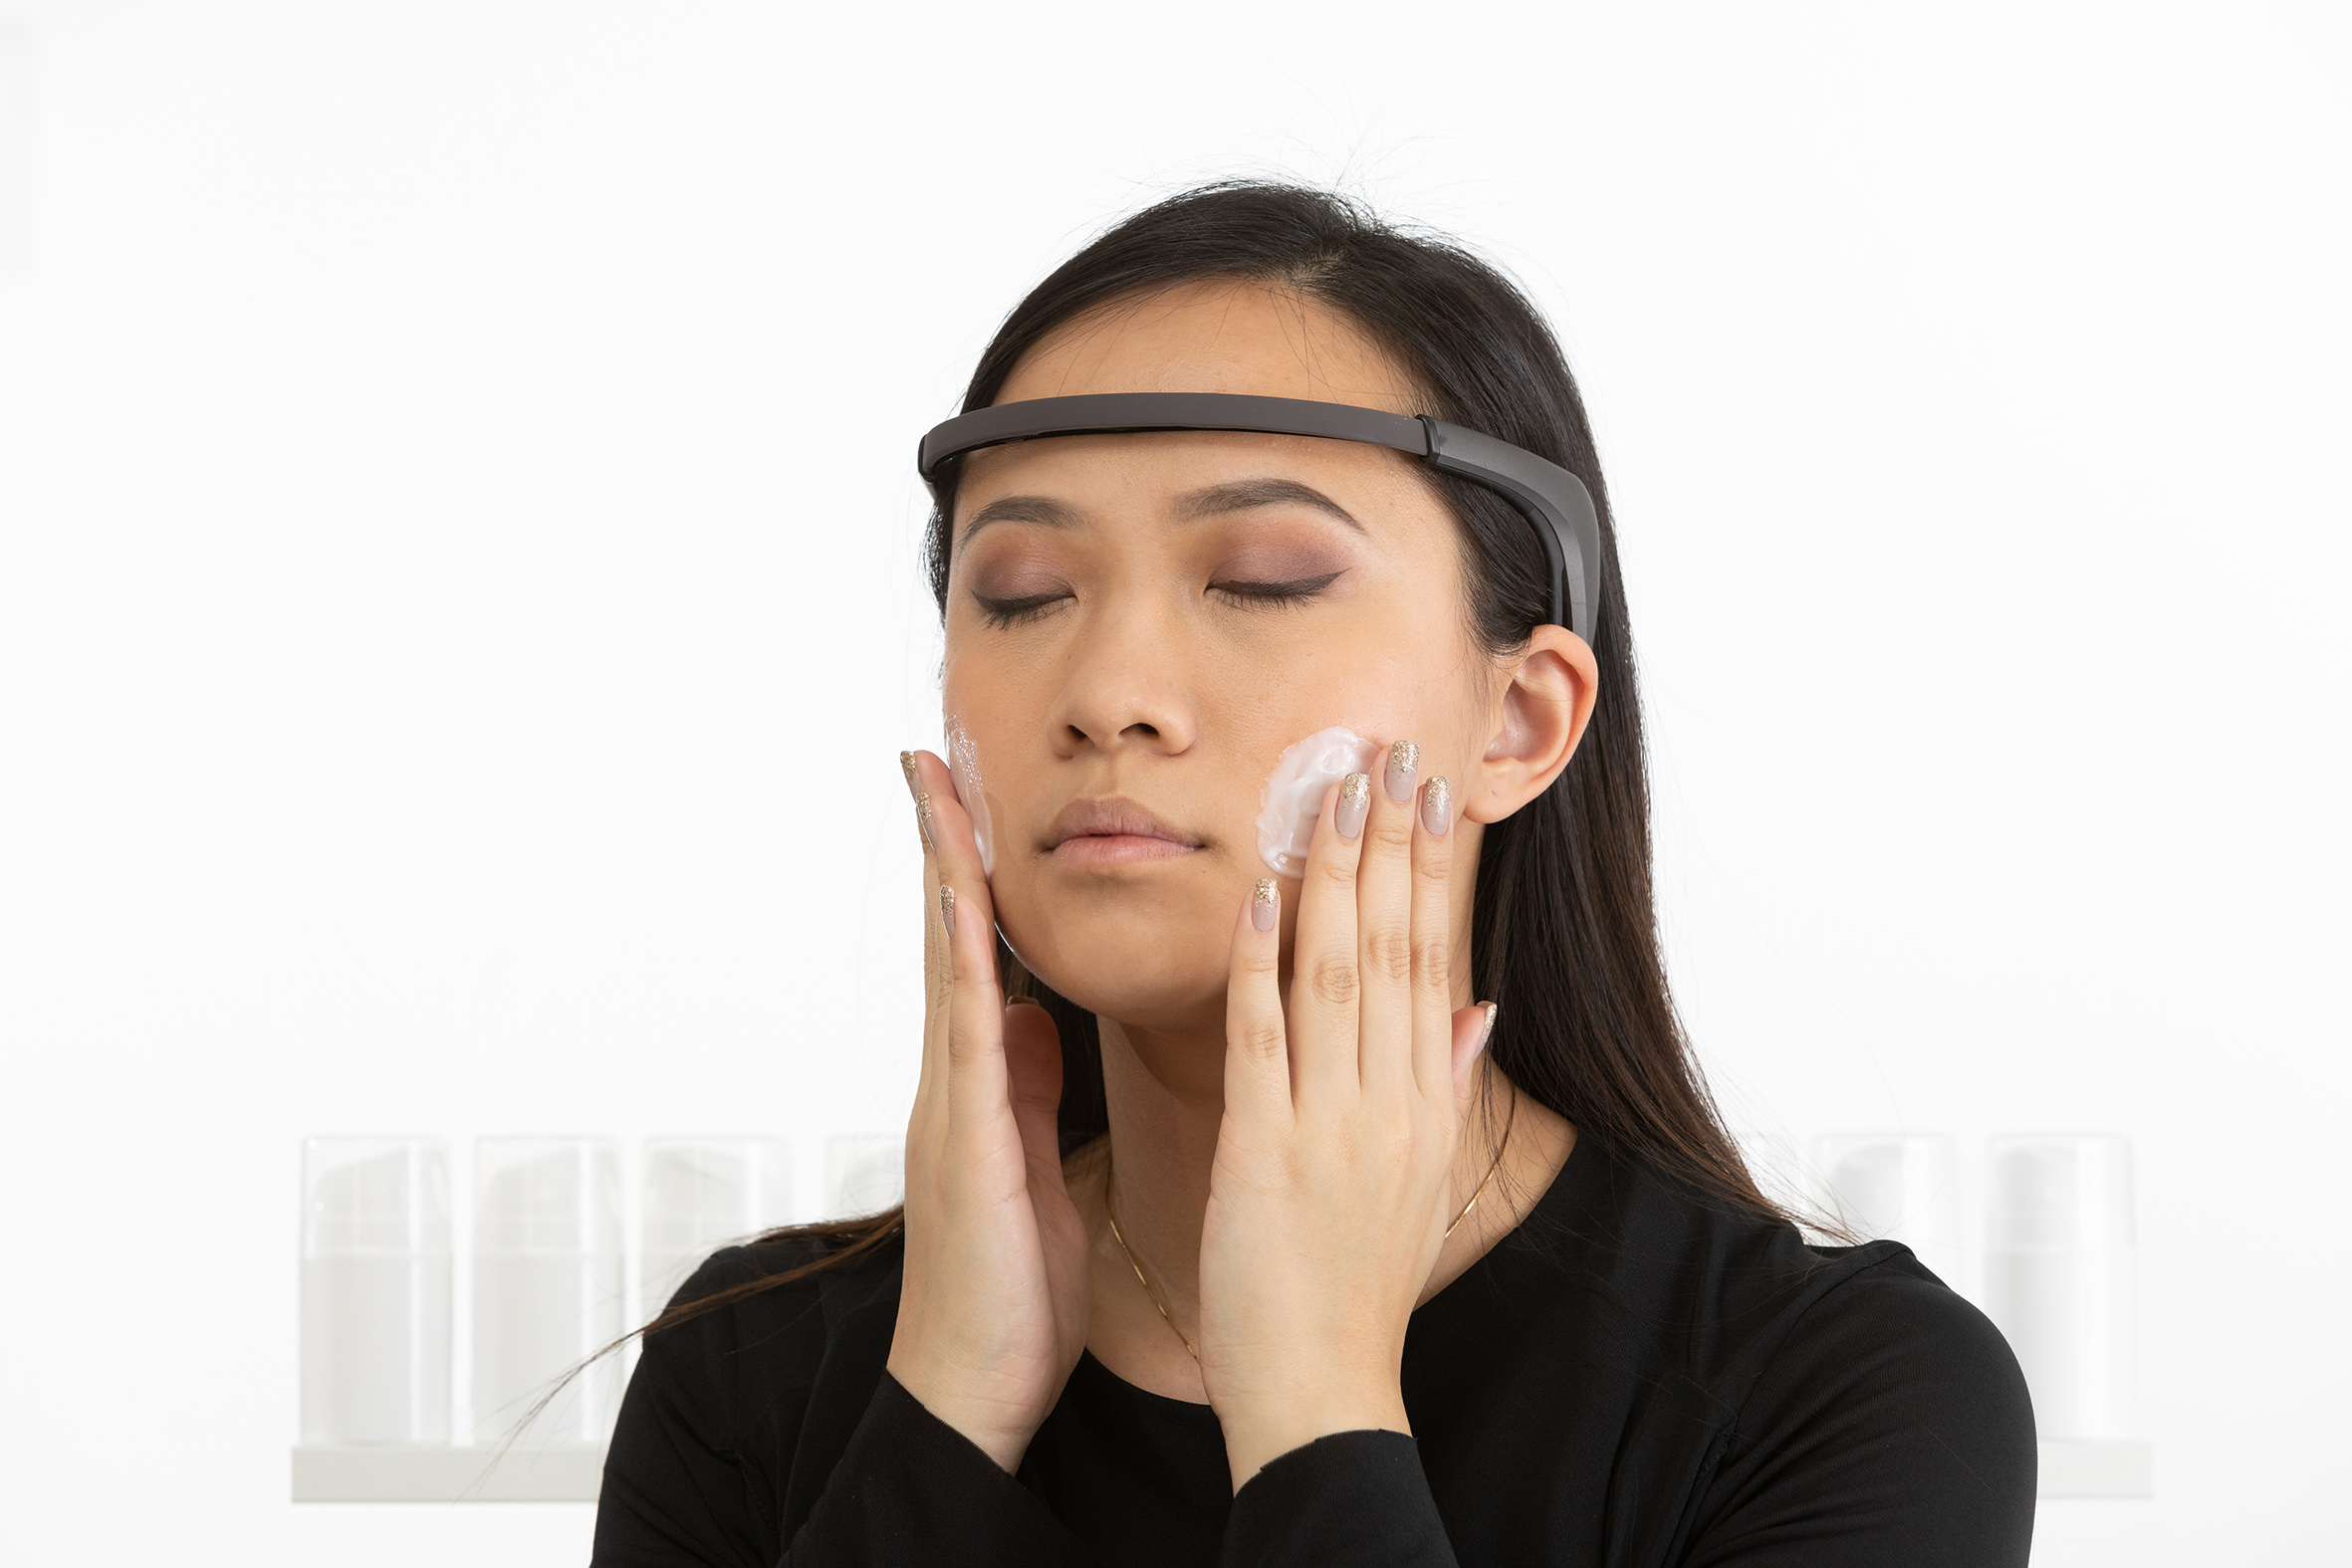 EEG headband measures the brain activity of a woman applying cream to her cheeks